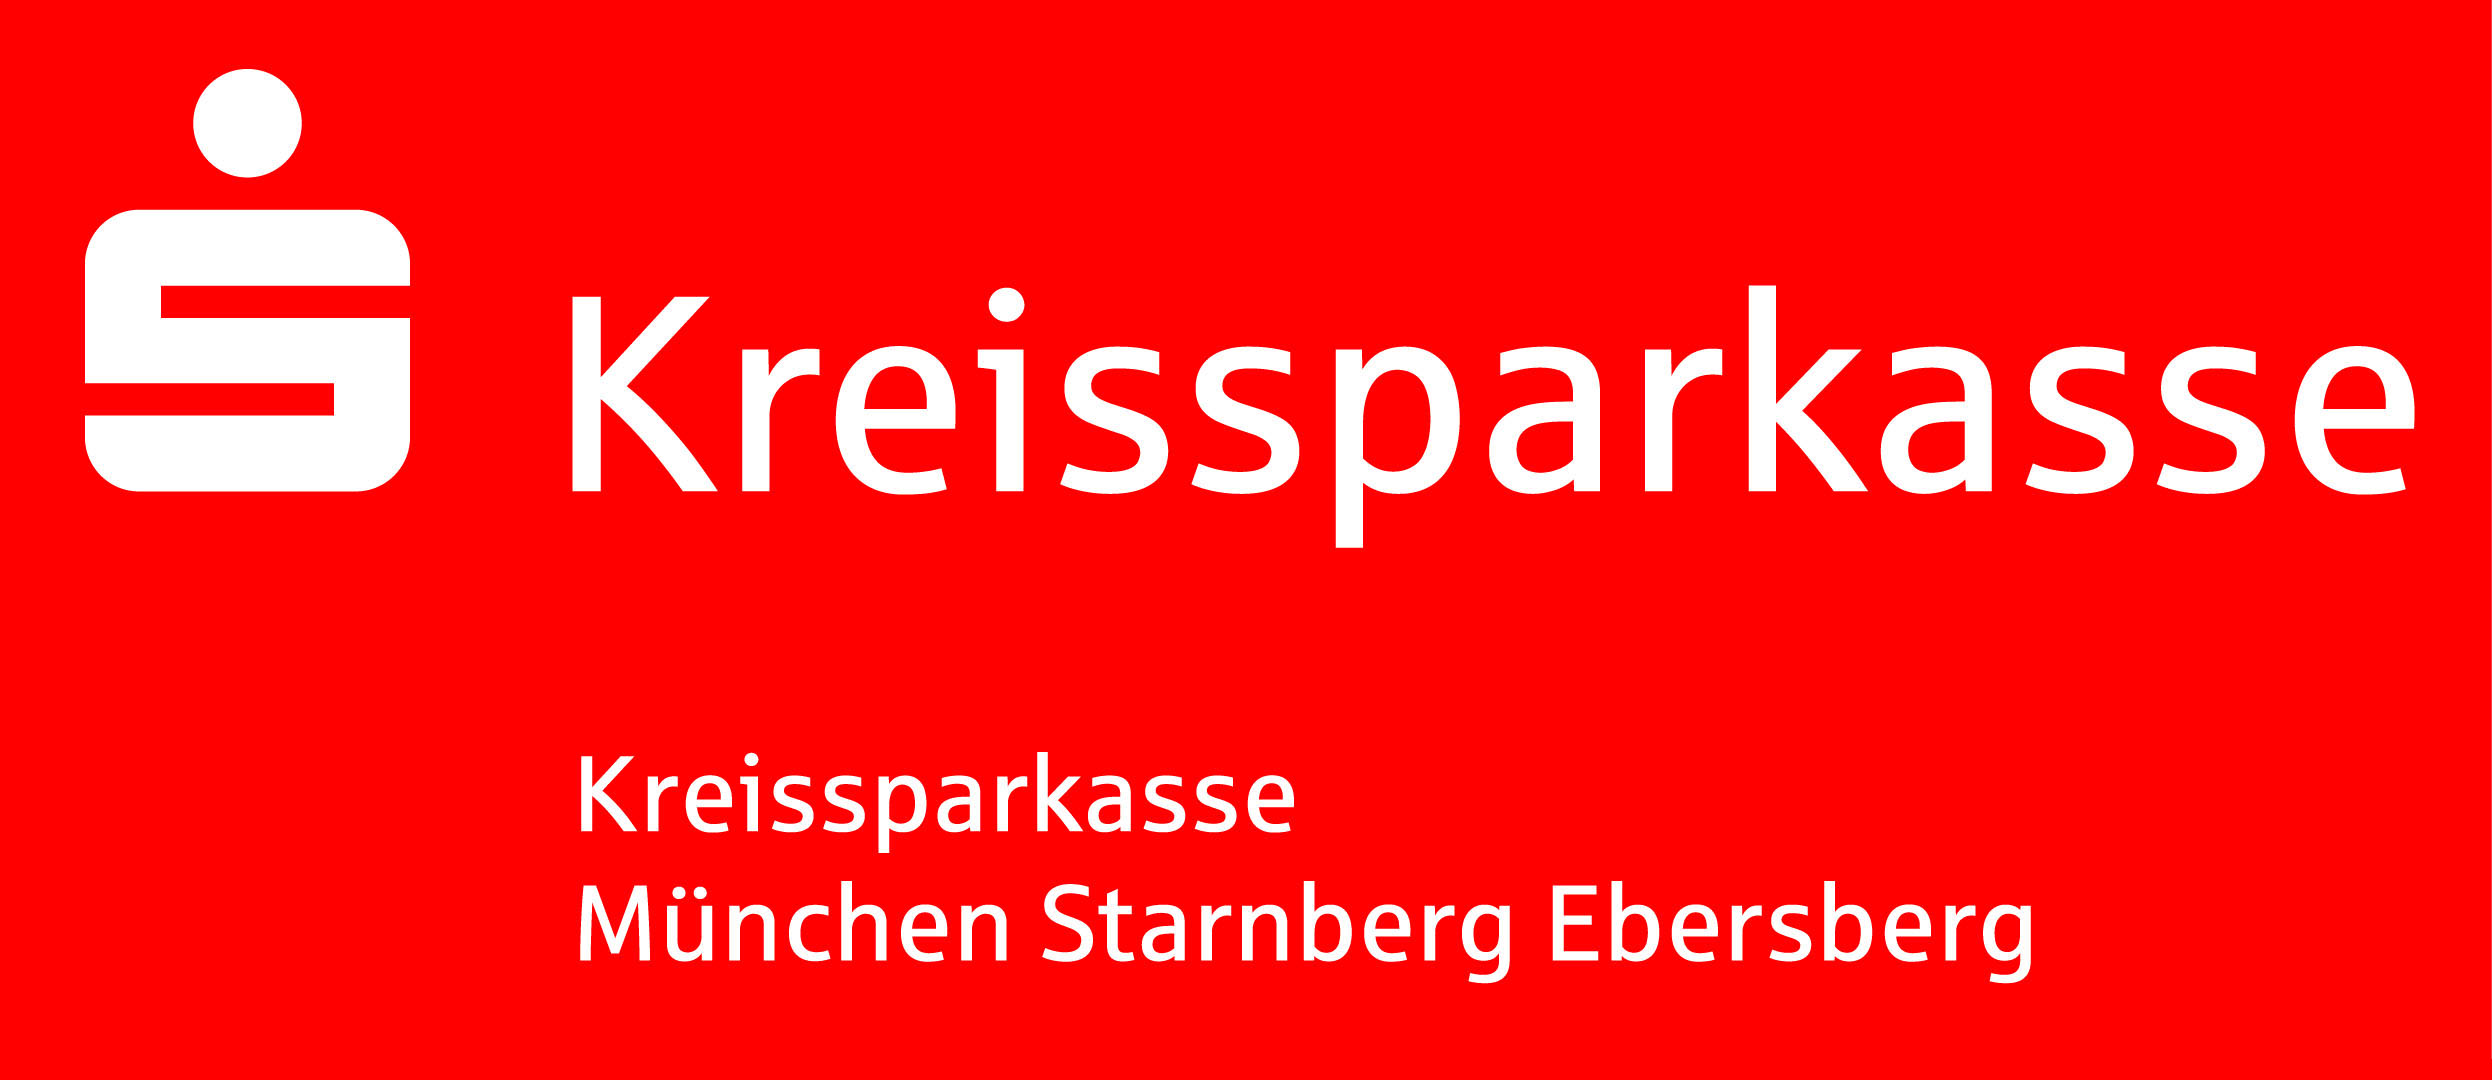 https://www.kskmse.de/content/dam/myif/ksk-muenchen-starnberg-ebersberg/work/bilder/logos/download_logo.jpg?n=true